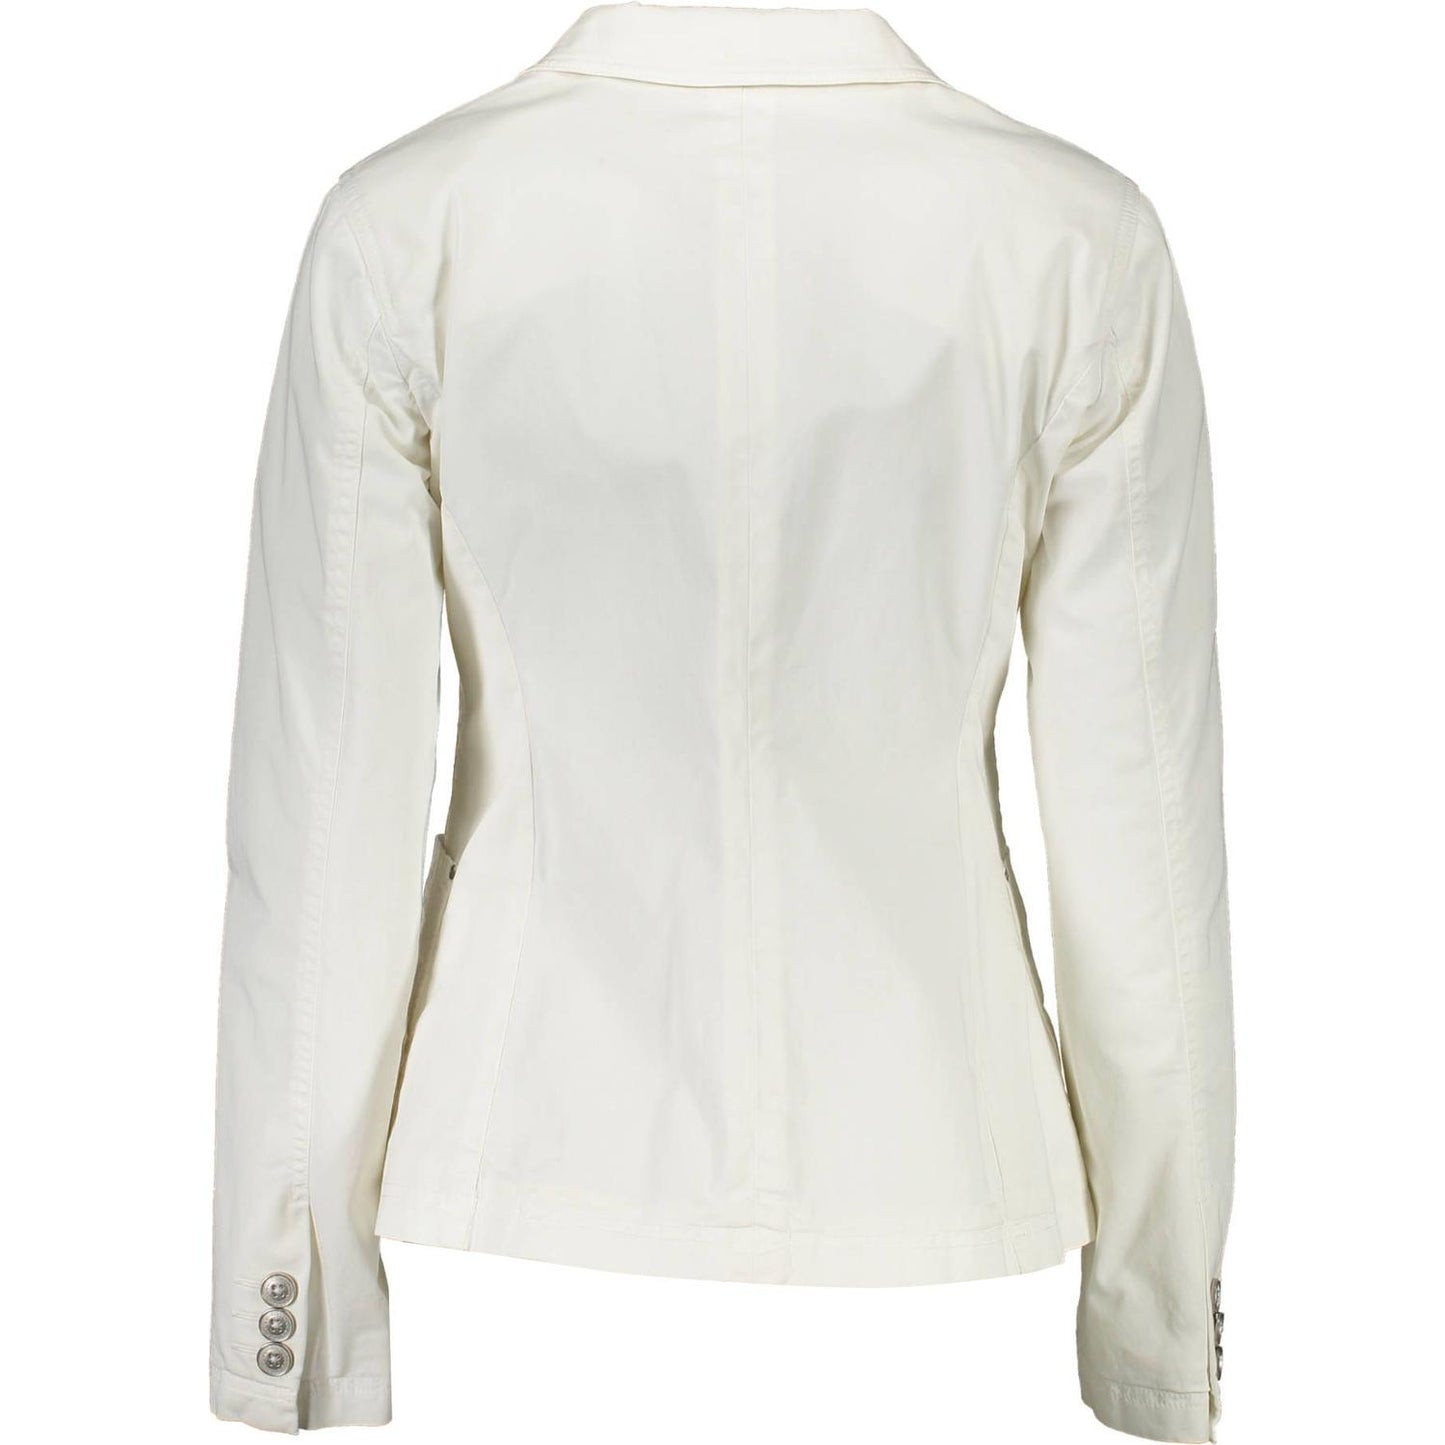 Gant Elegant White Cotton Classic Jacket elegant-white-cotton-classic-jacket